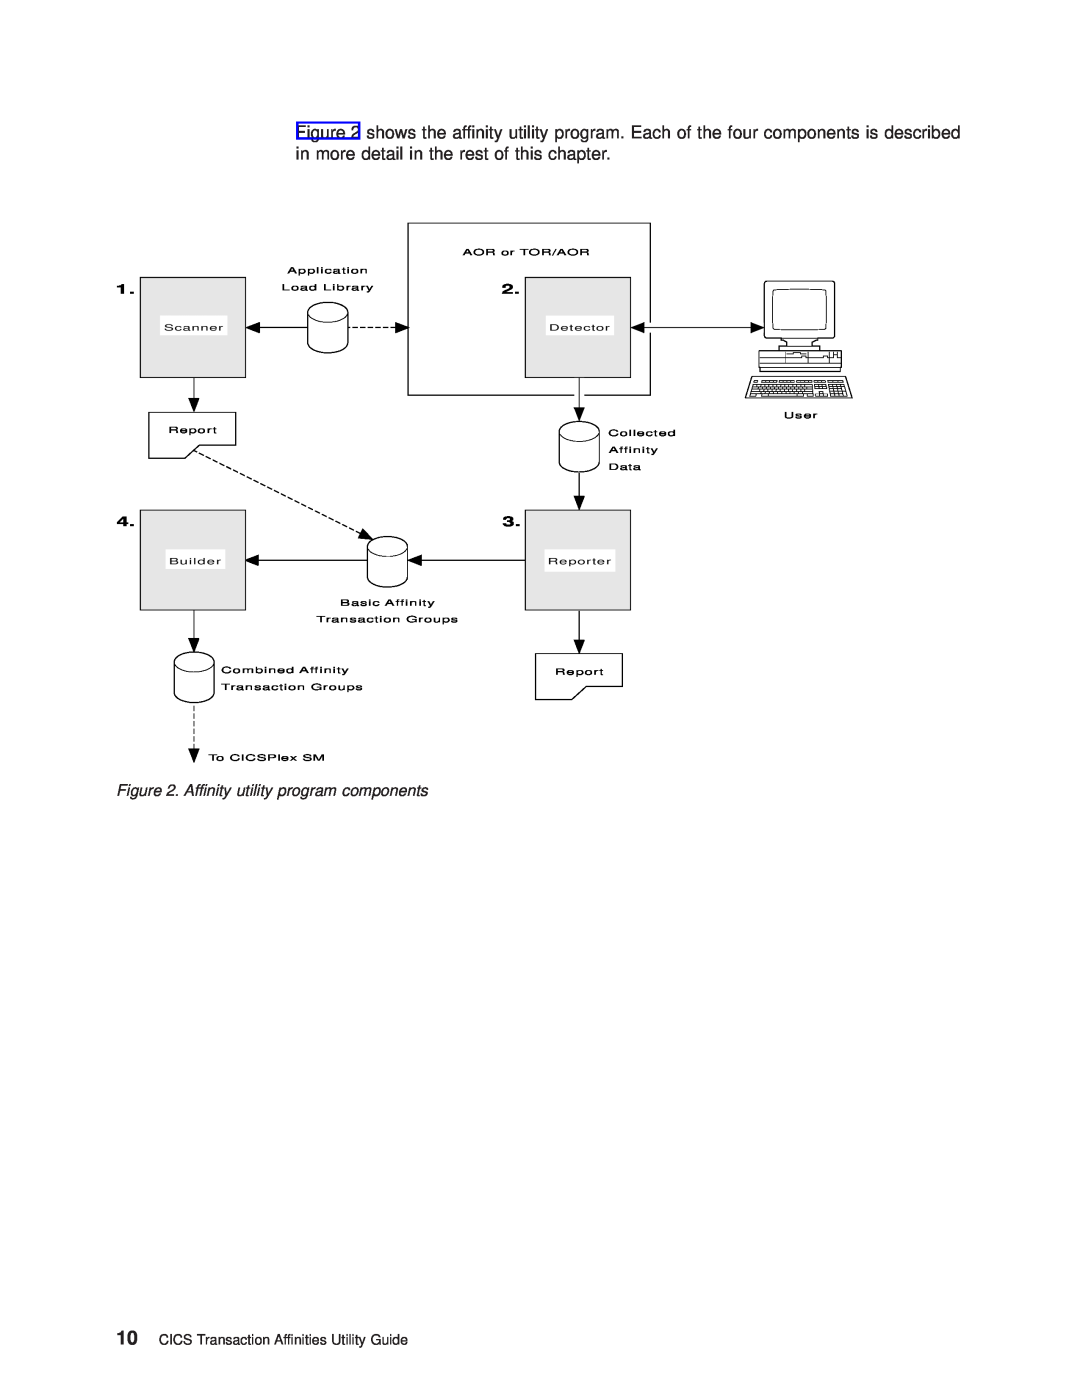 IBM OS manual Affinity utility program components, CICS Transaction Affinities Utility Guide 